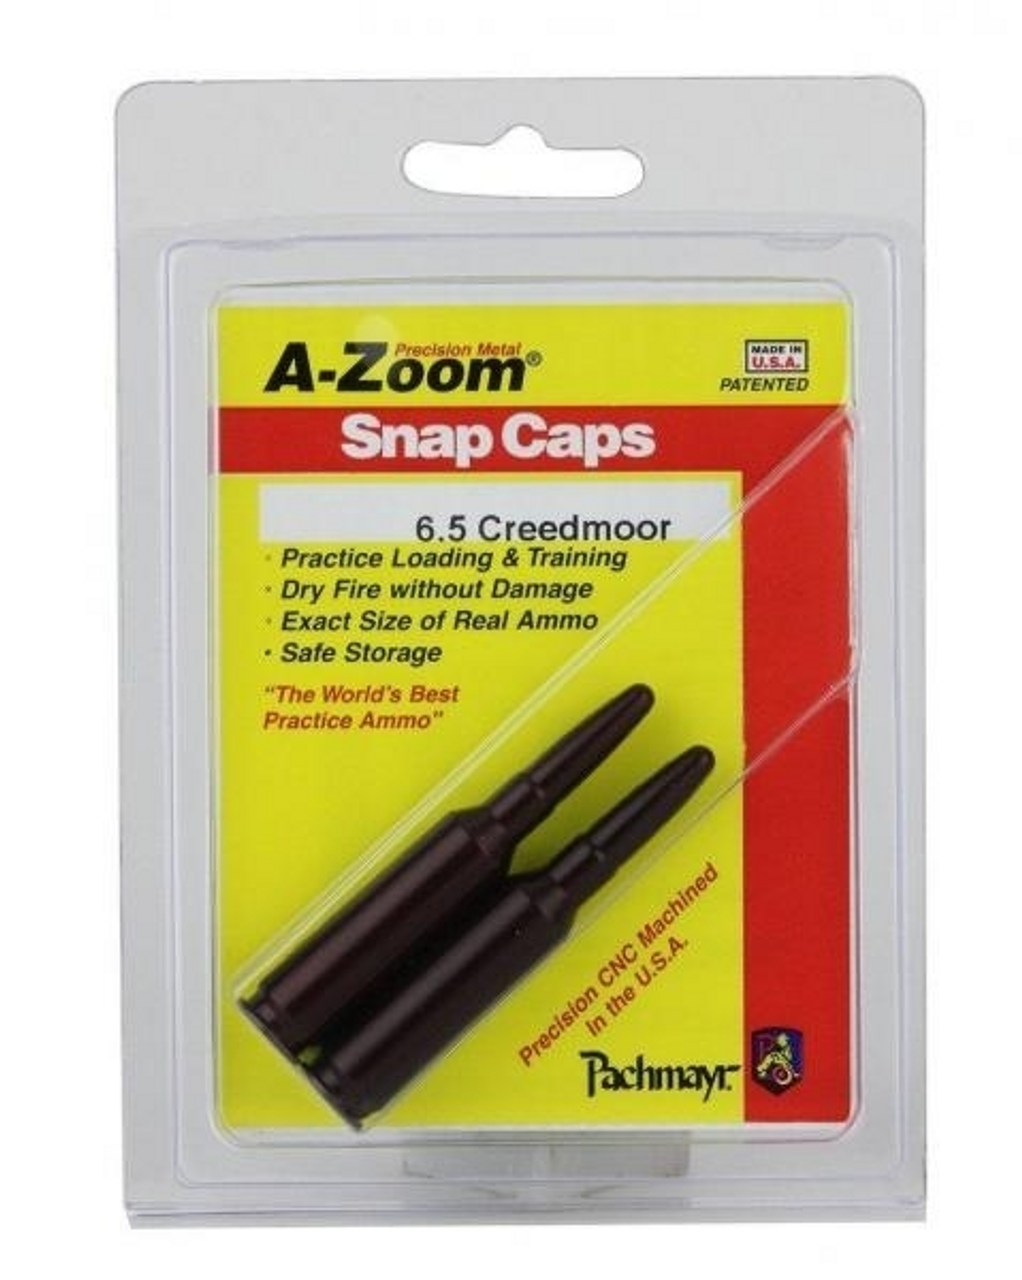 A-Zoom 6.5 Creedmoor Snap Caps, 2 Pack